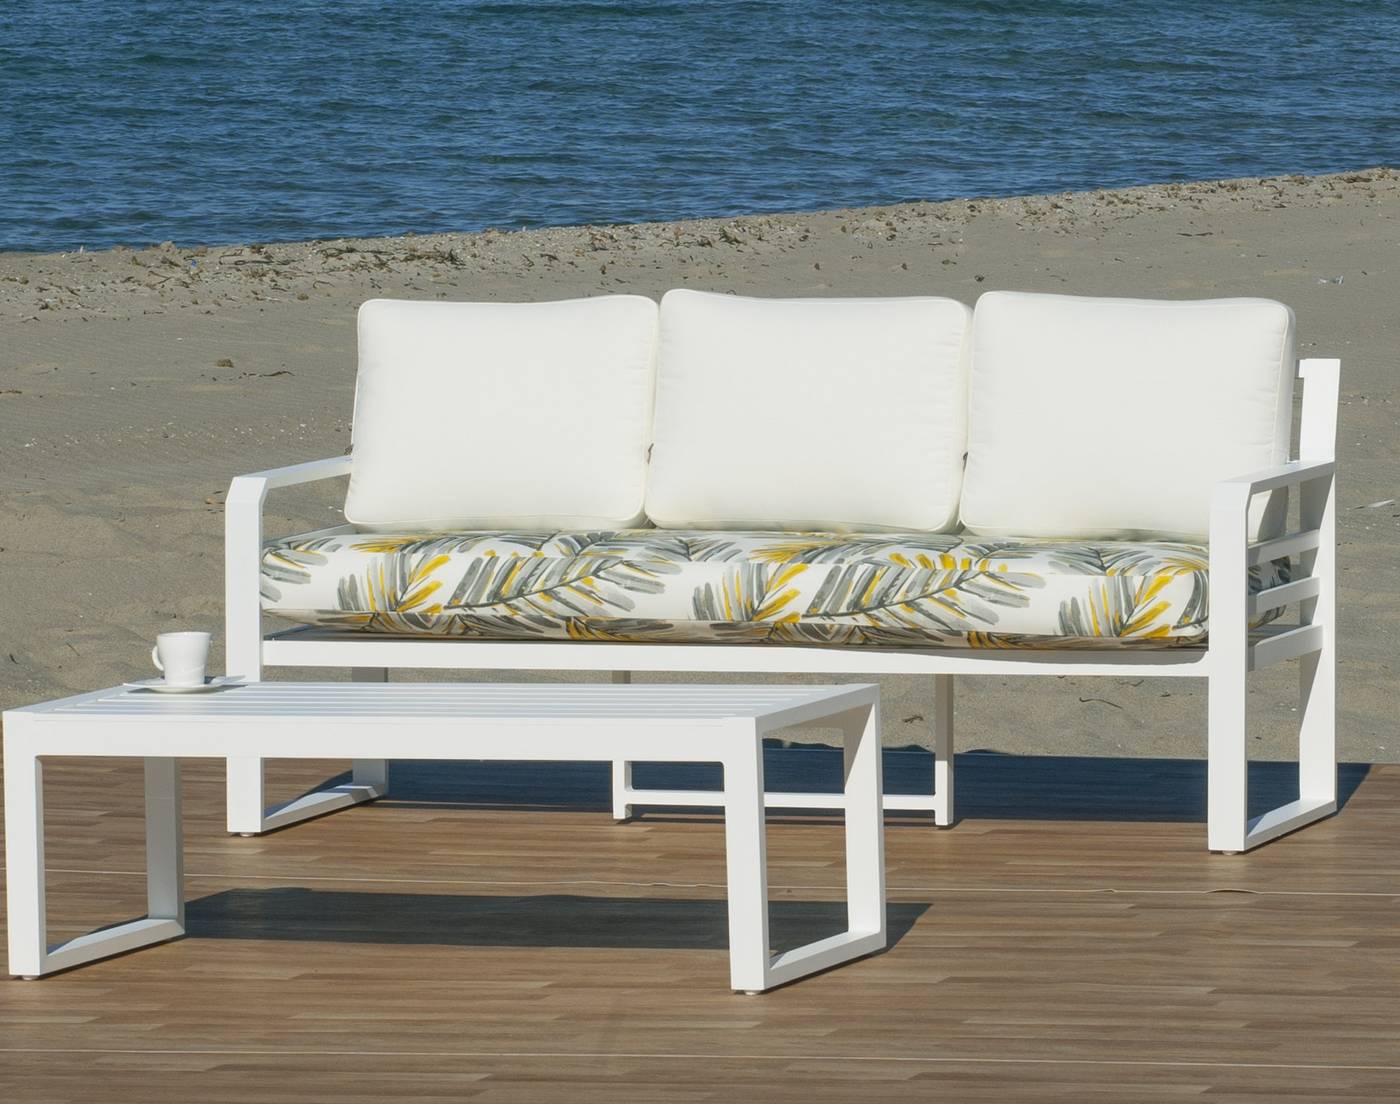 Set Aluminio Piave-8 - Conjunto aluminio: 1 sofá 3 plazas + 2 sillones + 1 mesa de centro + cojines. Disponible en color blanco o antracita.